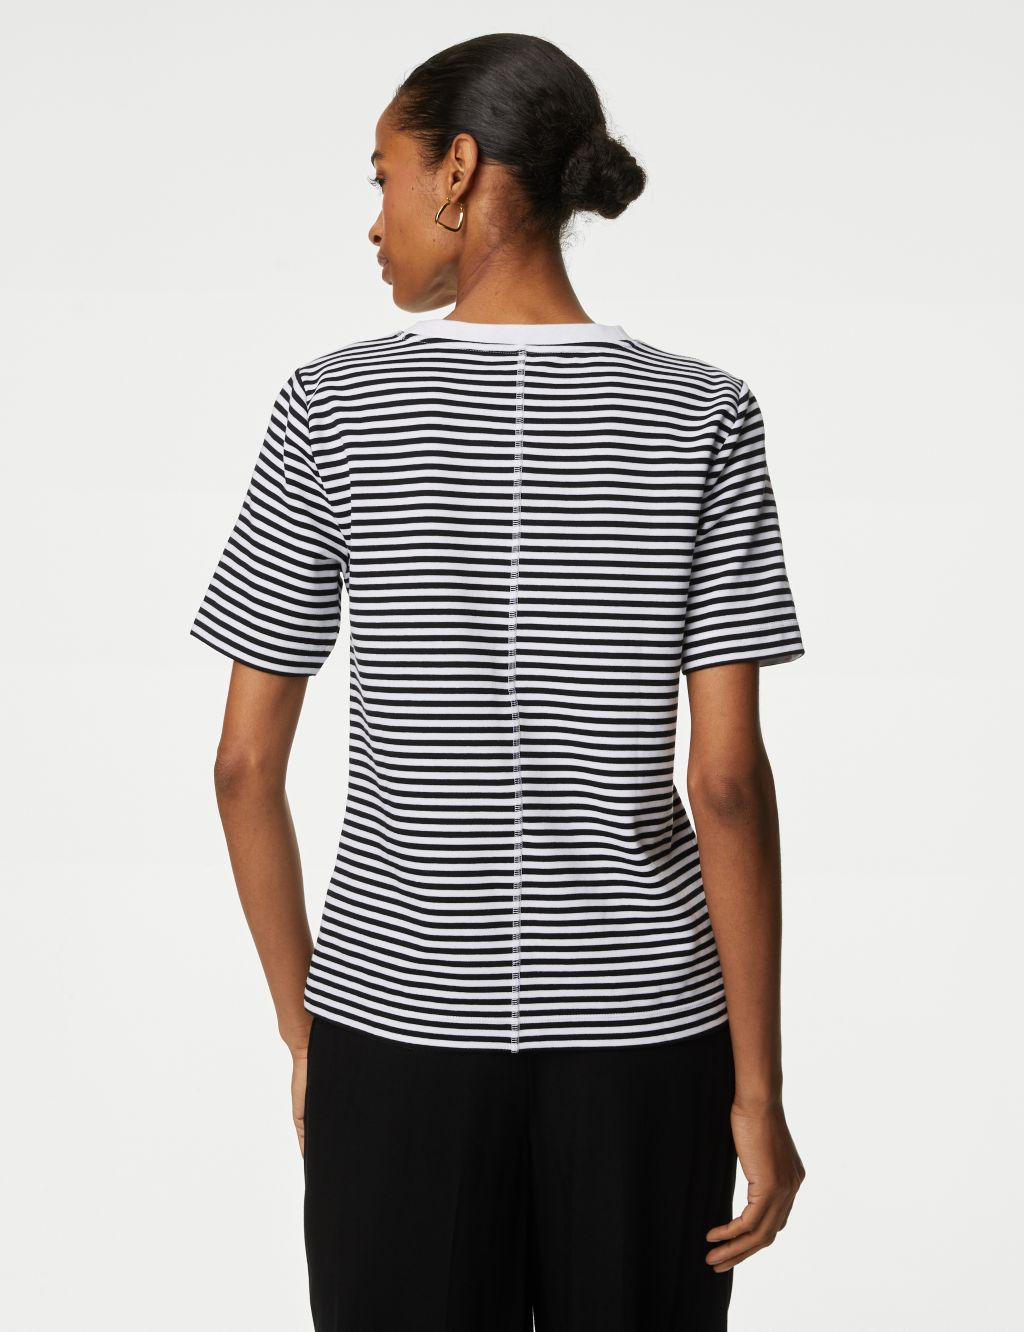 Cotton Rich Striped T-Shirt image 4